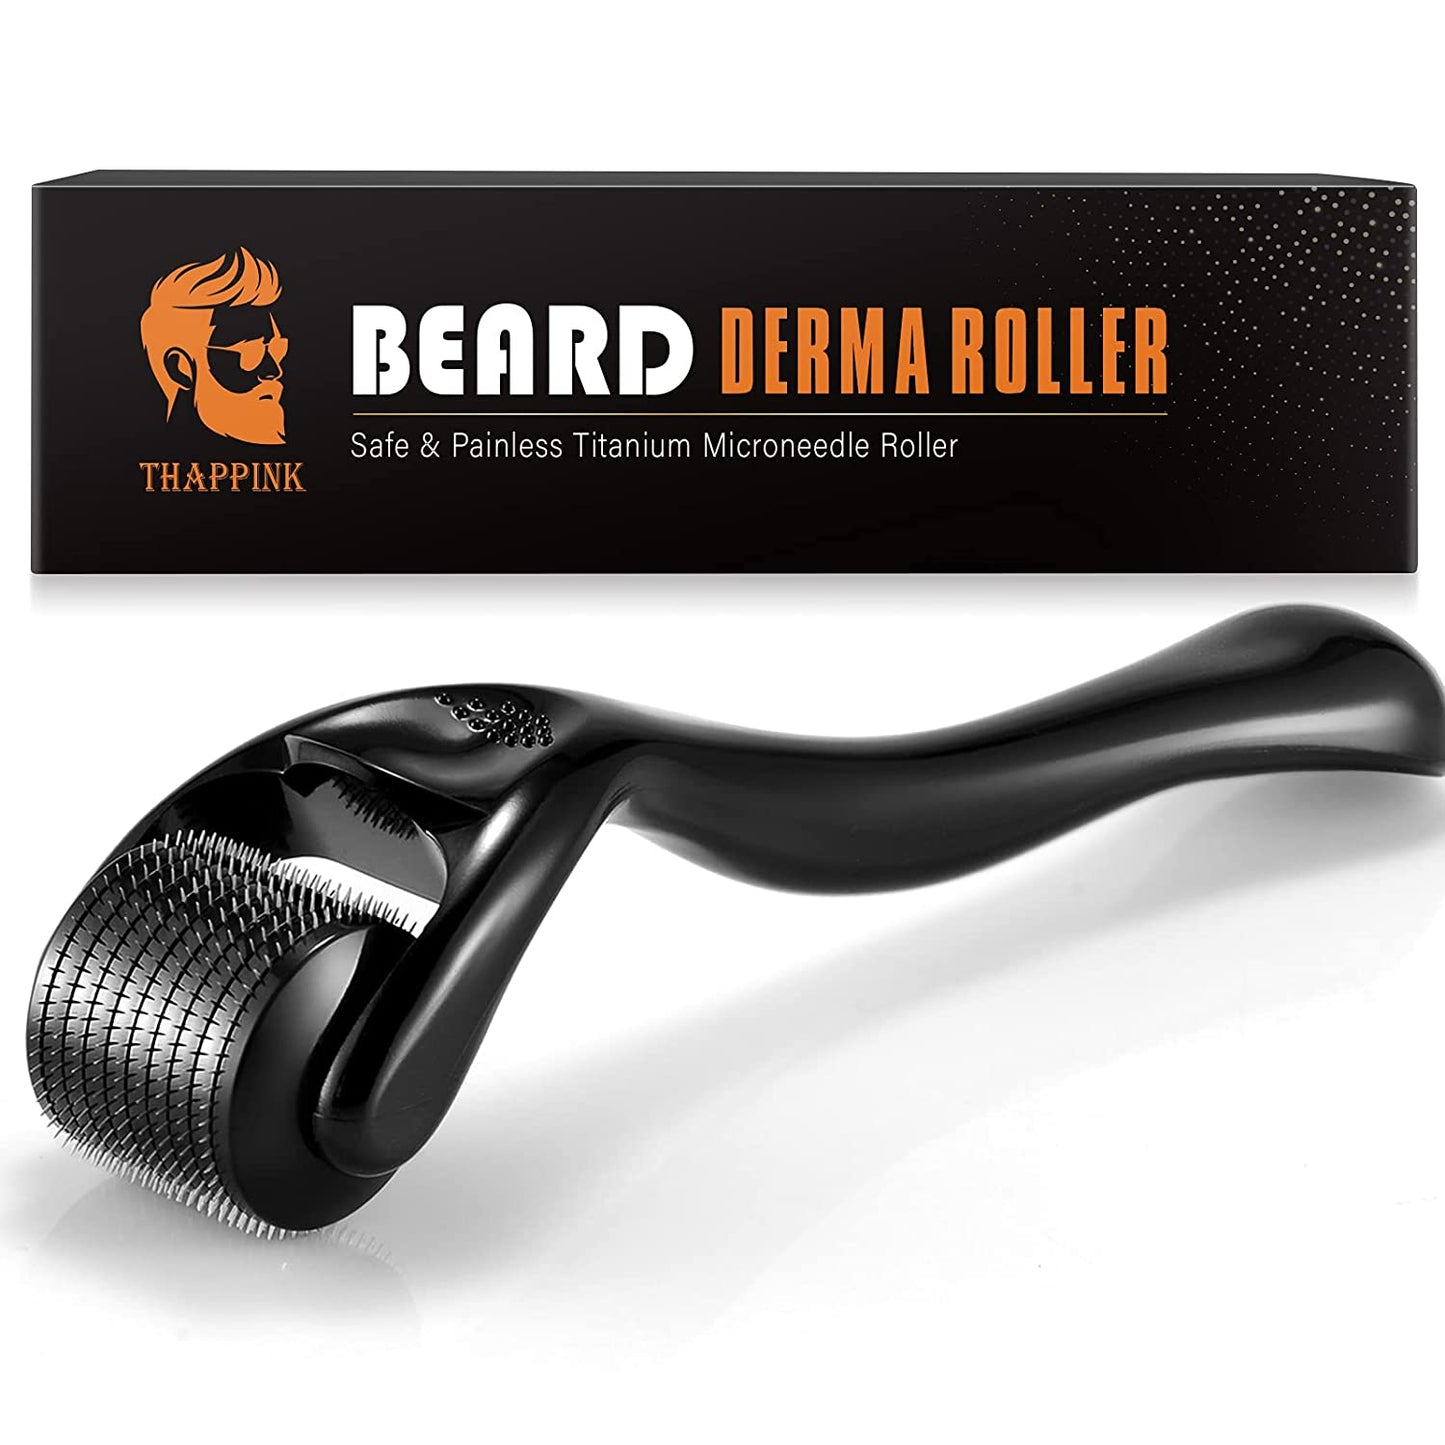 Beard Derma Roller Microneedle Roller for Beard Growth, 0.25mm Derma Roller for Patchy Beard Growth